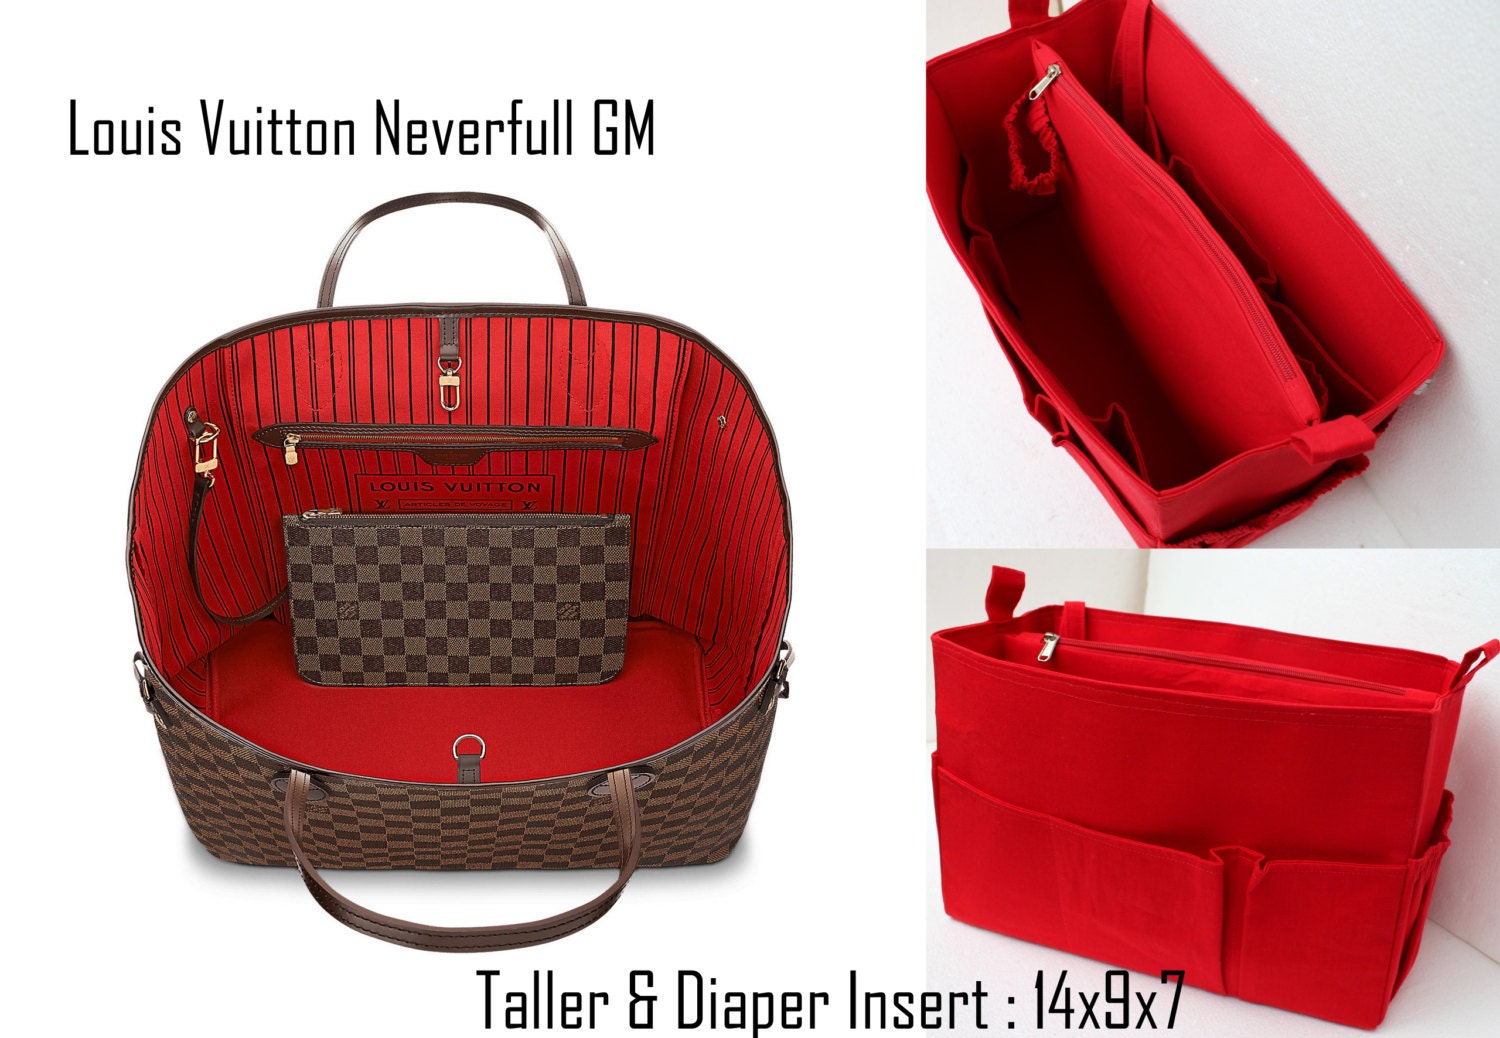 Louis Vuitton Neverfull Gm As Diaper Bag